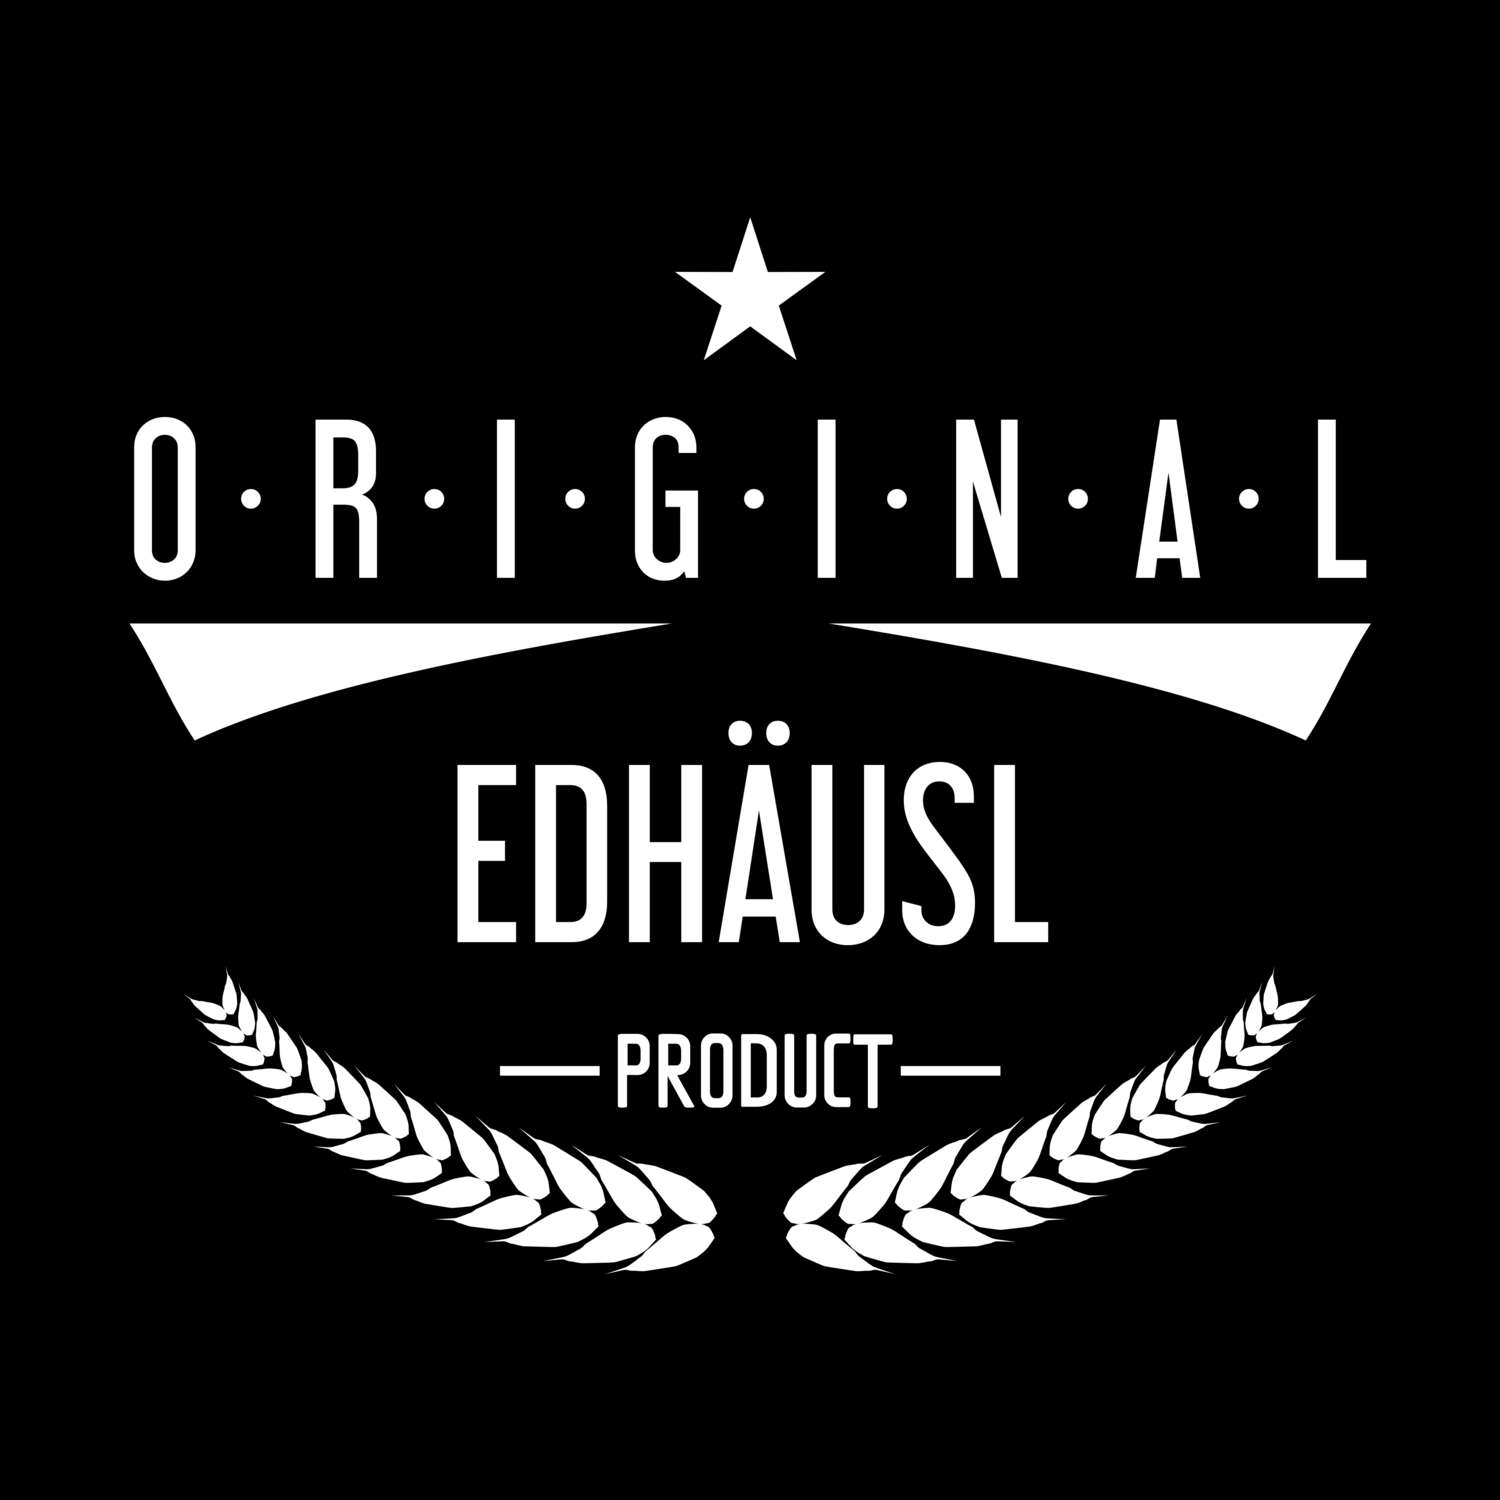 Edhäusl T-Shirt »Original Product«